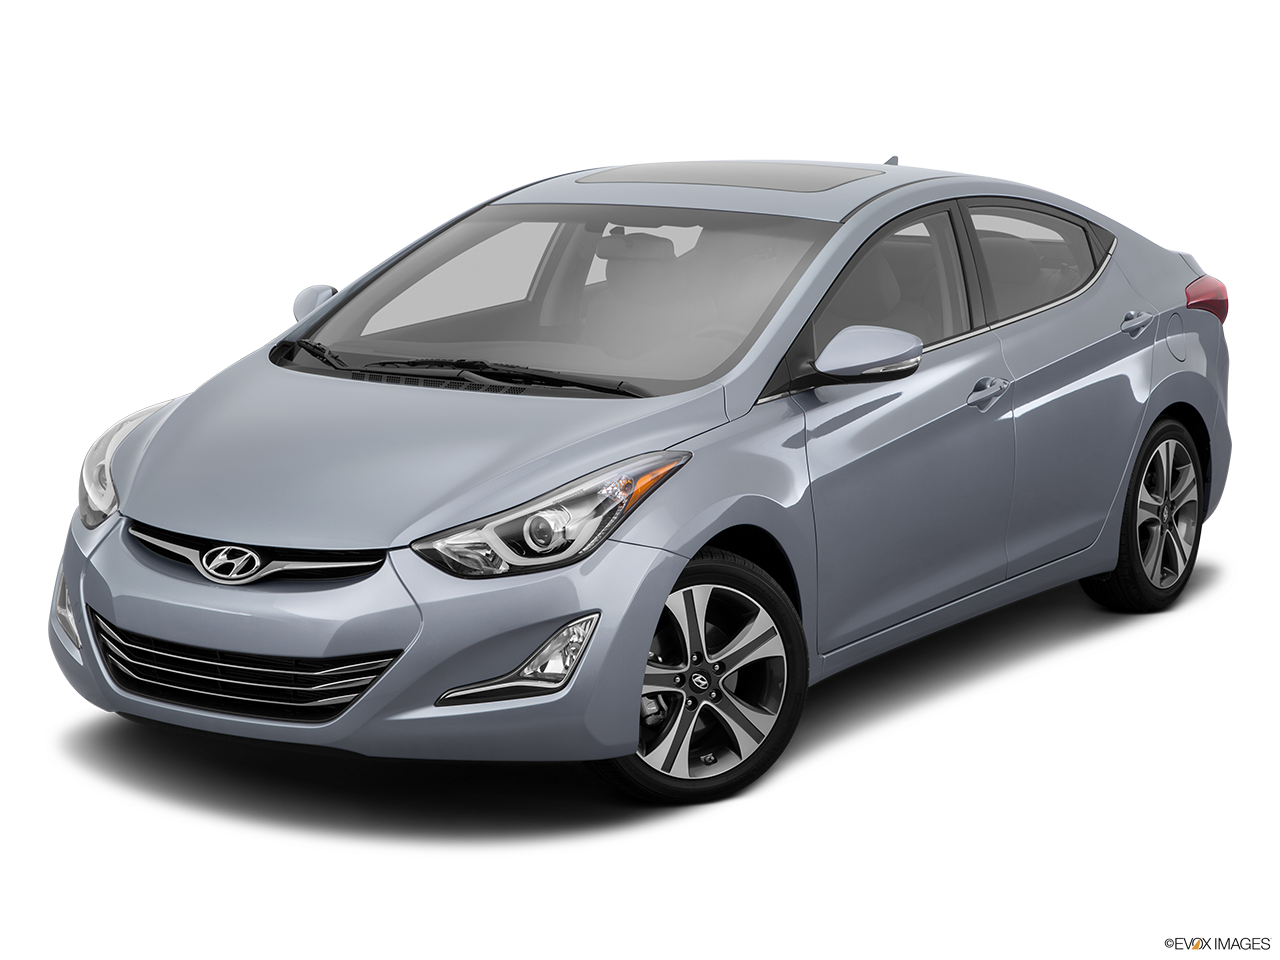 2011-2015 Hyundai Elantra generation